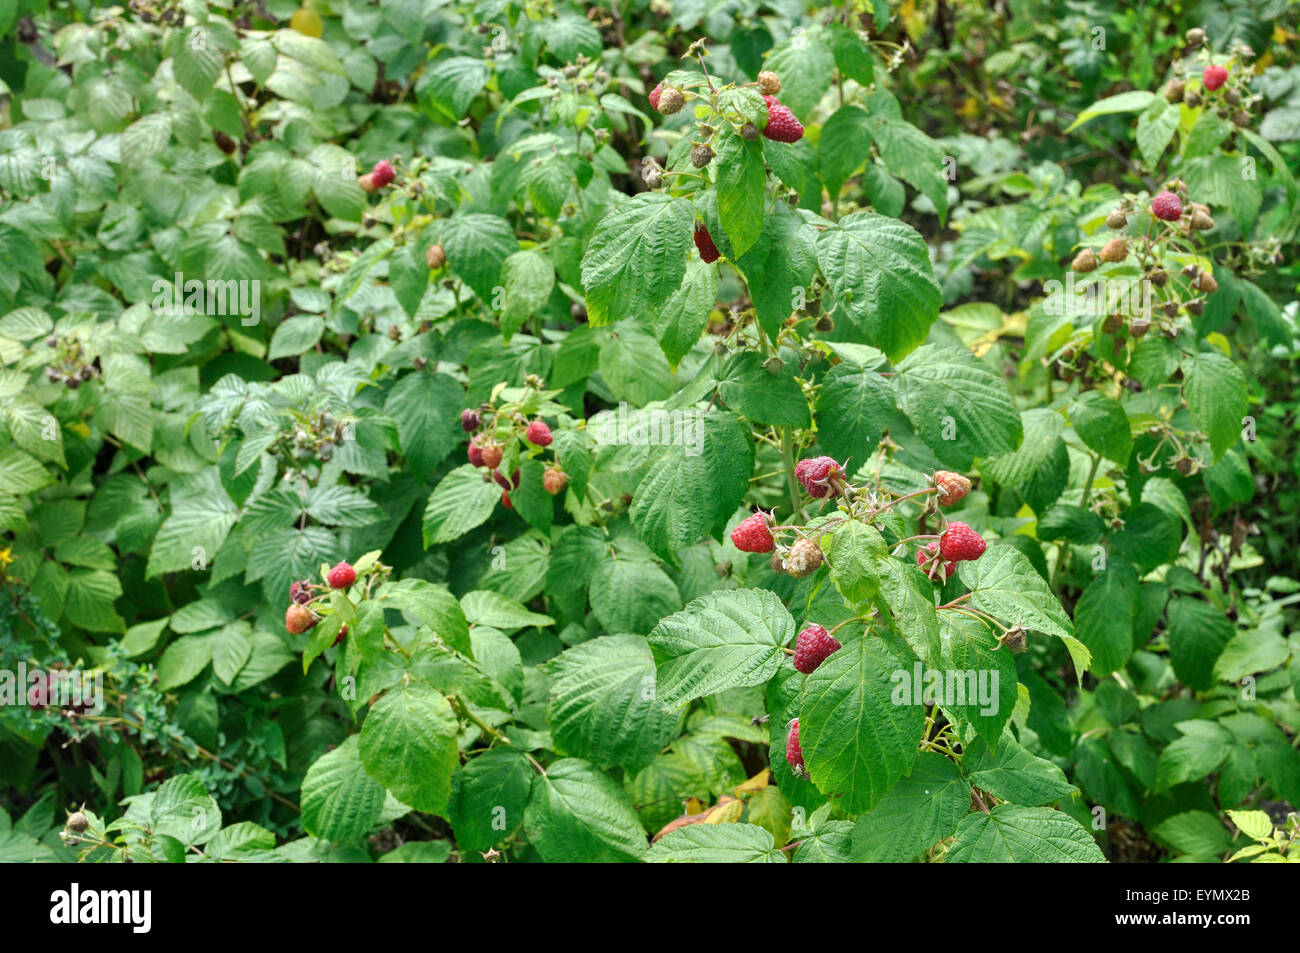 https://c8.alamy.com/comp/EYMX2B/close-up-wild-raspberry-plantation-EYMX2B.jpg